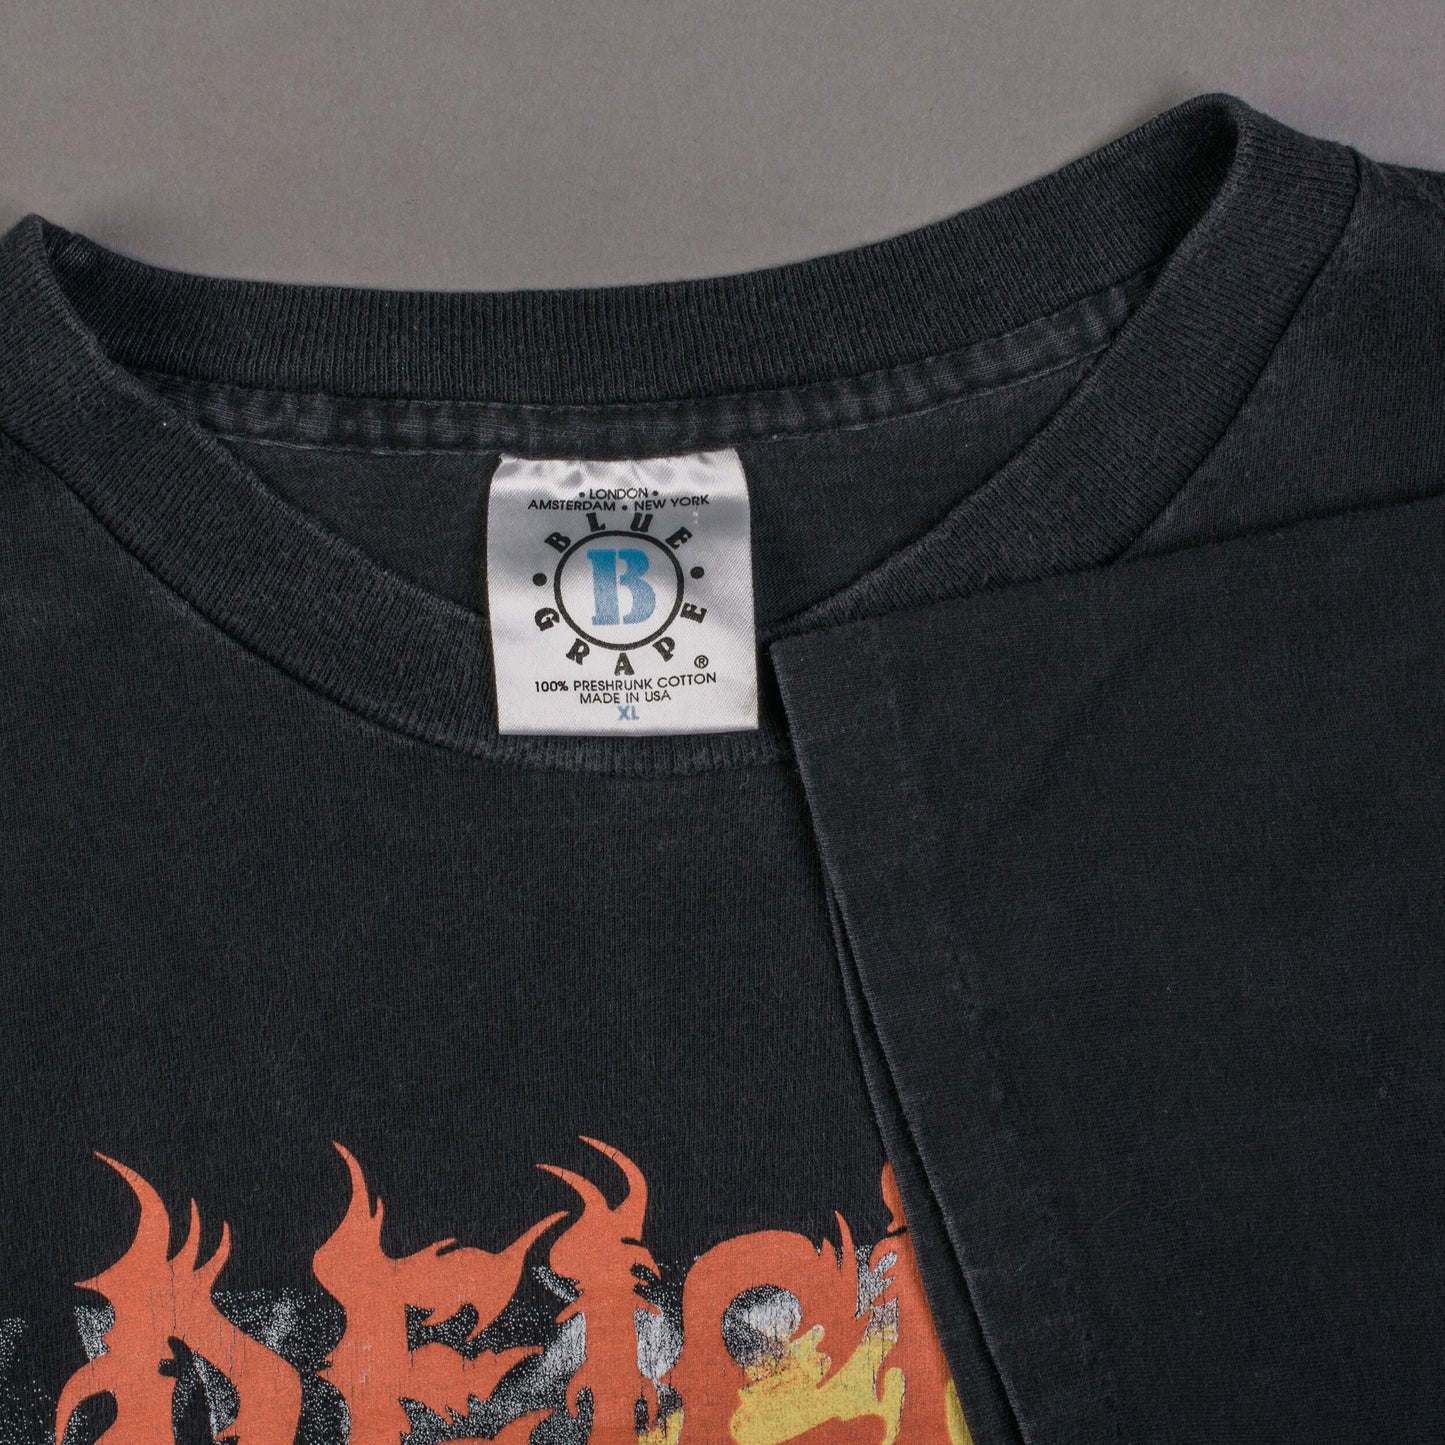 Vintage 90’s Deicide Serpents Of The Light T-Shirt